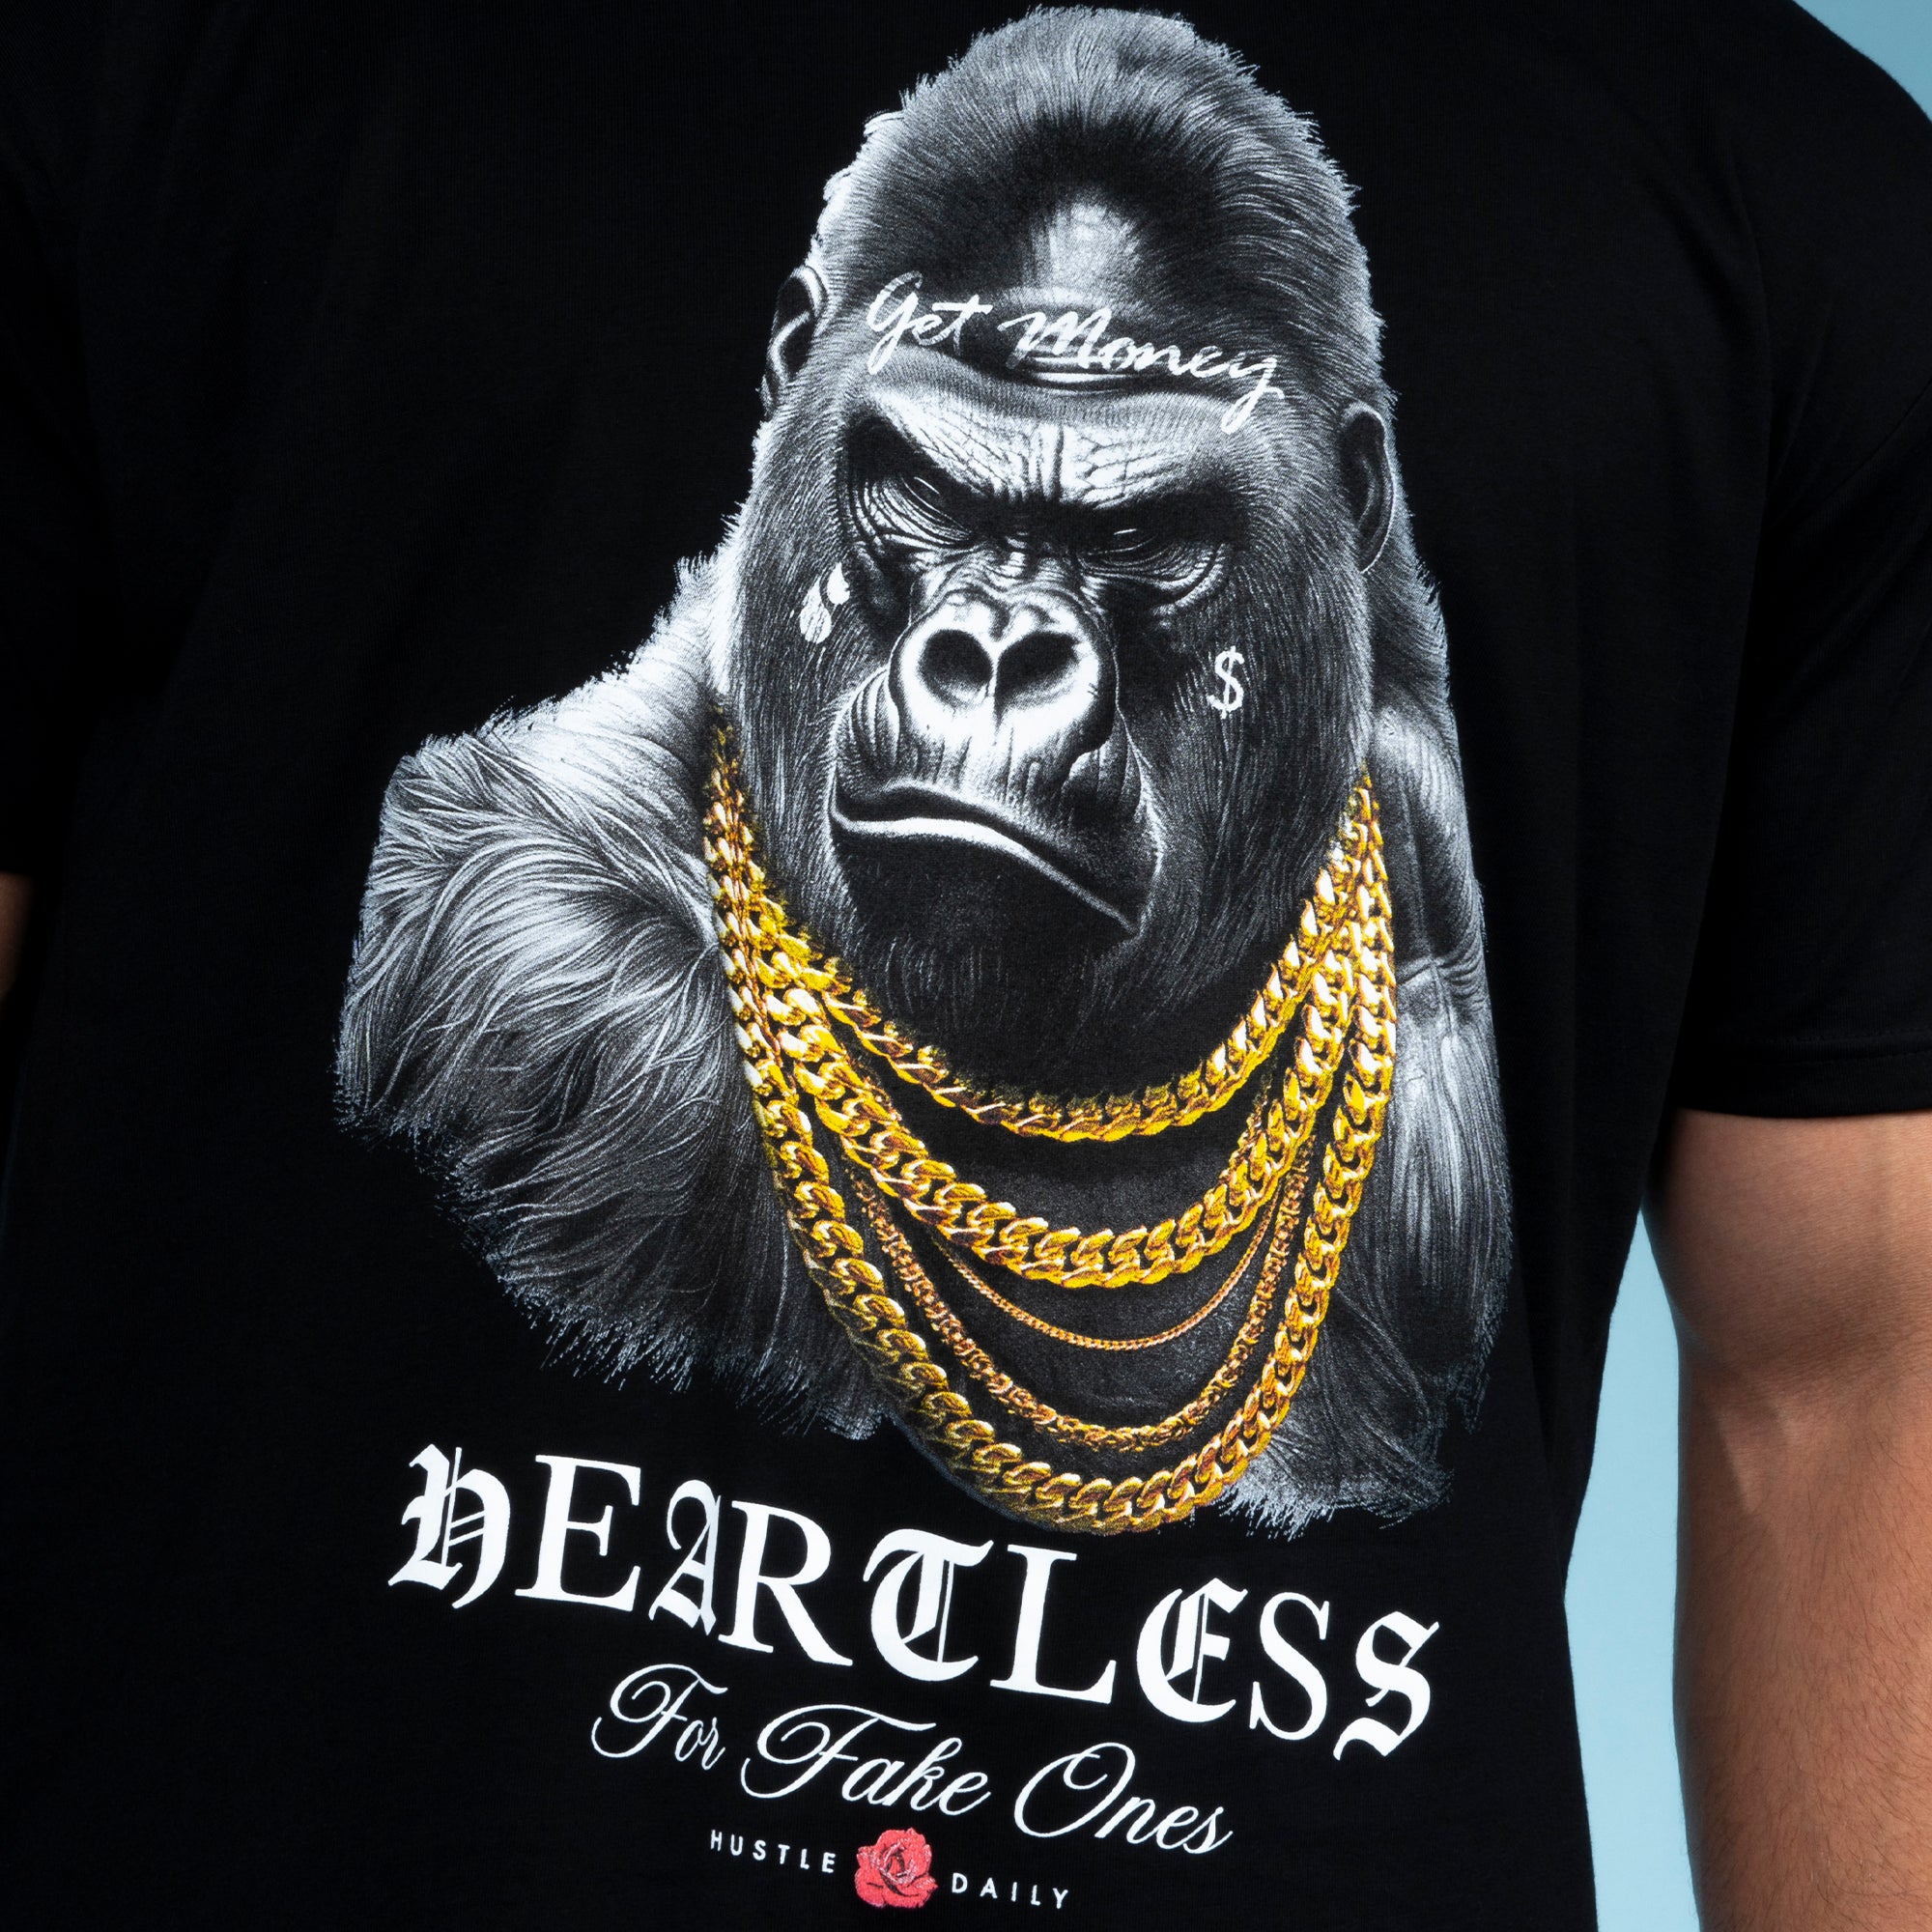 Gorilla Heartless QS - Black